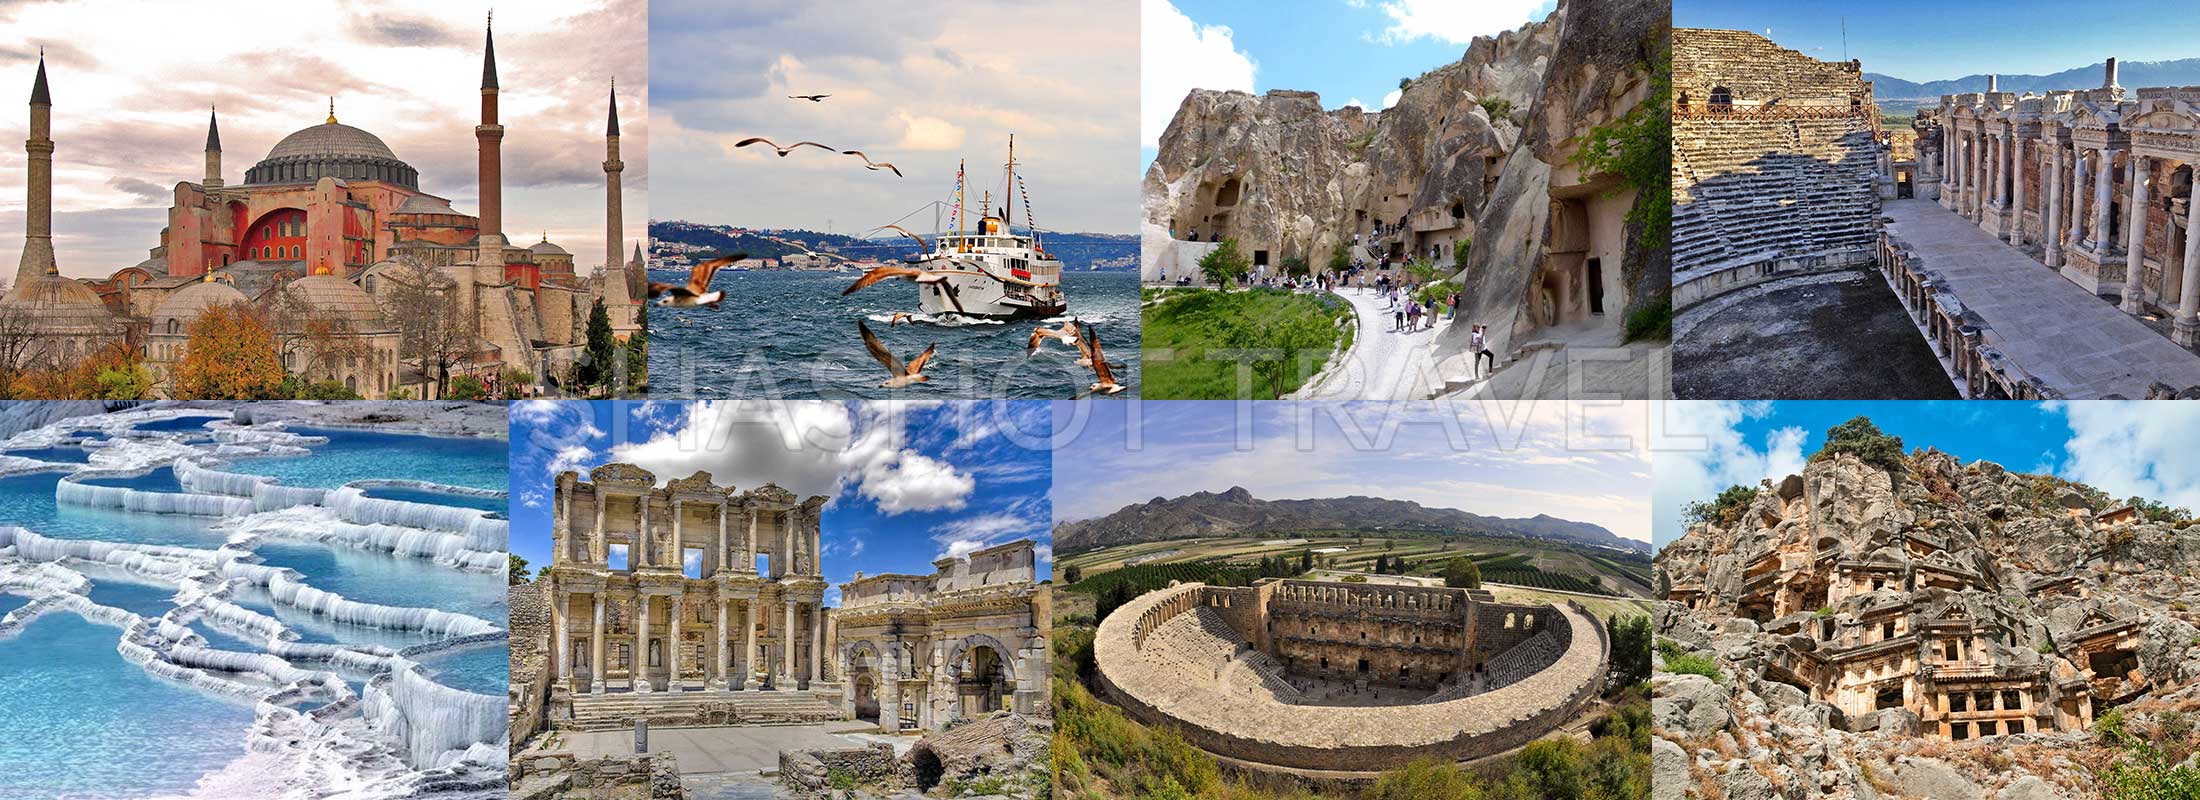 11-DAYS-TURKEY-PACKAGE-TOUR-ISTANBUL-CAPPADOCIA-PAMUKKALE-EPHESUS-ANTALYA